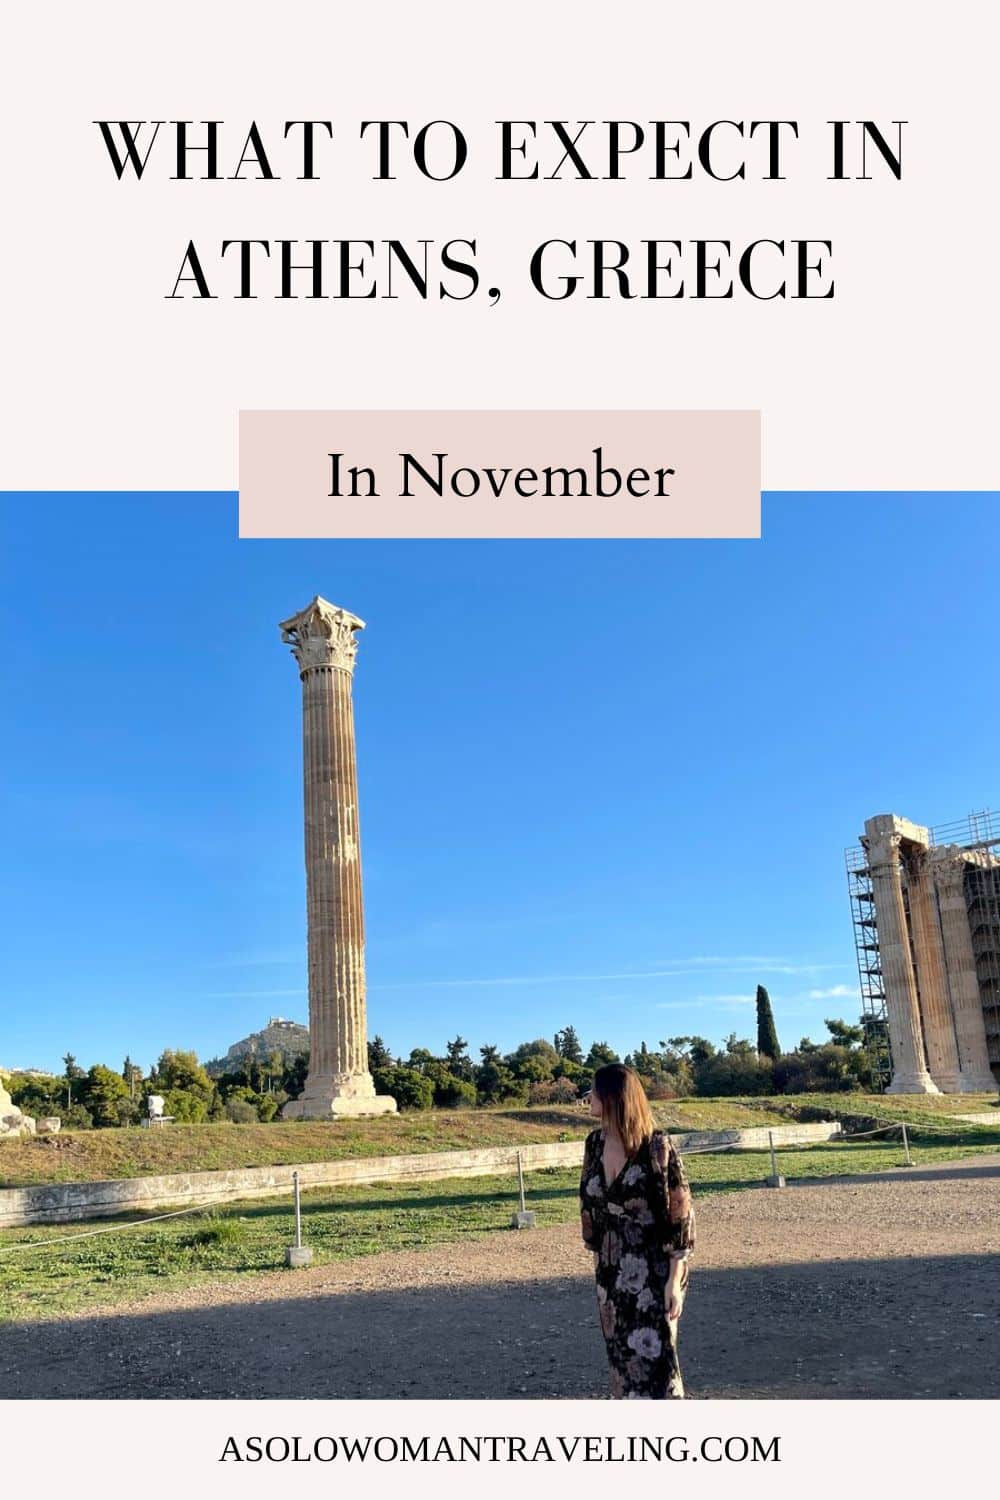 Visiting Athens in November